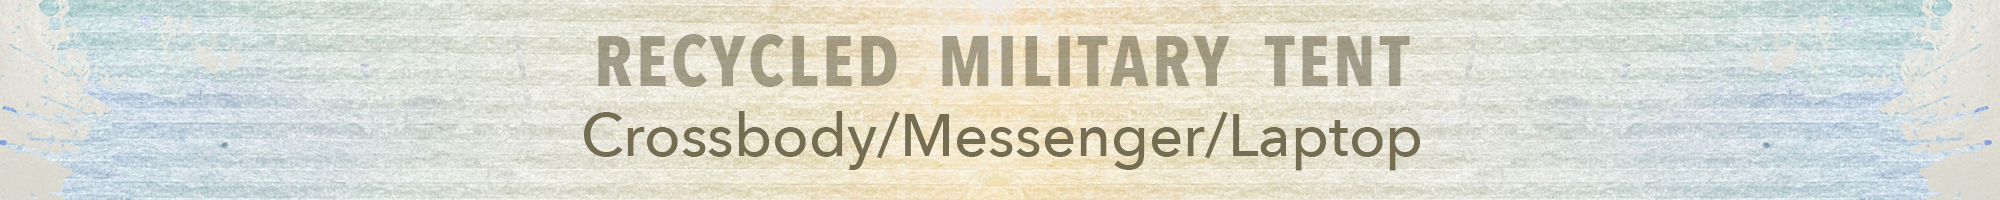 Crossbody/Messenger/laptop banner